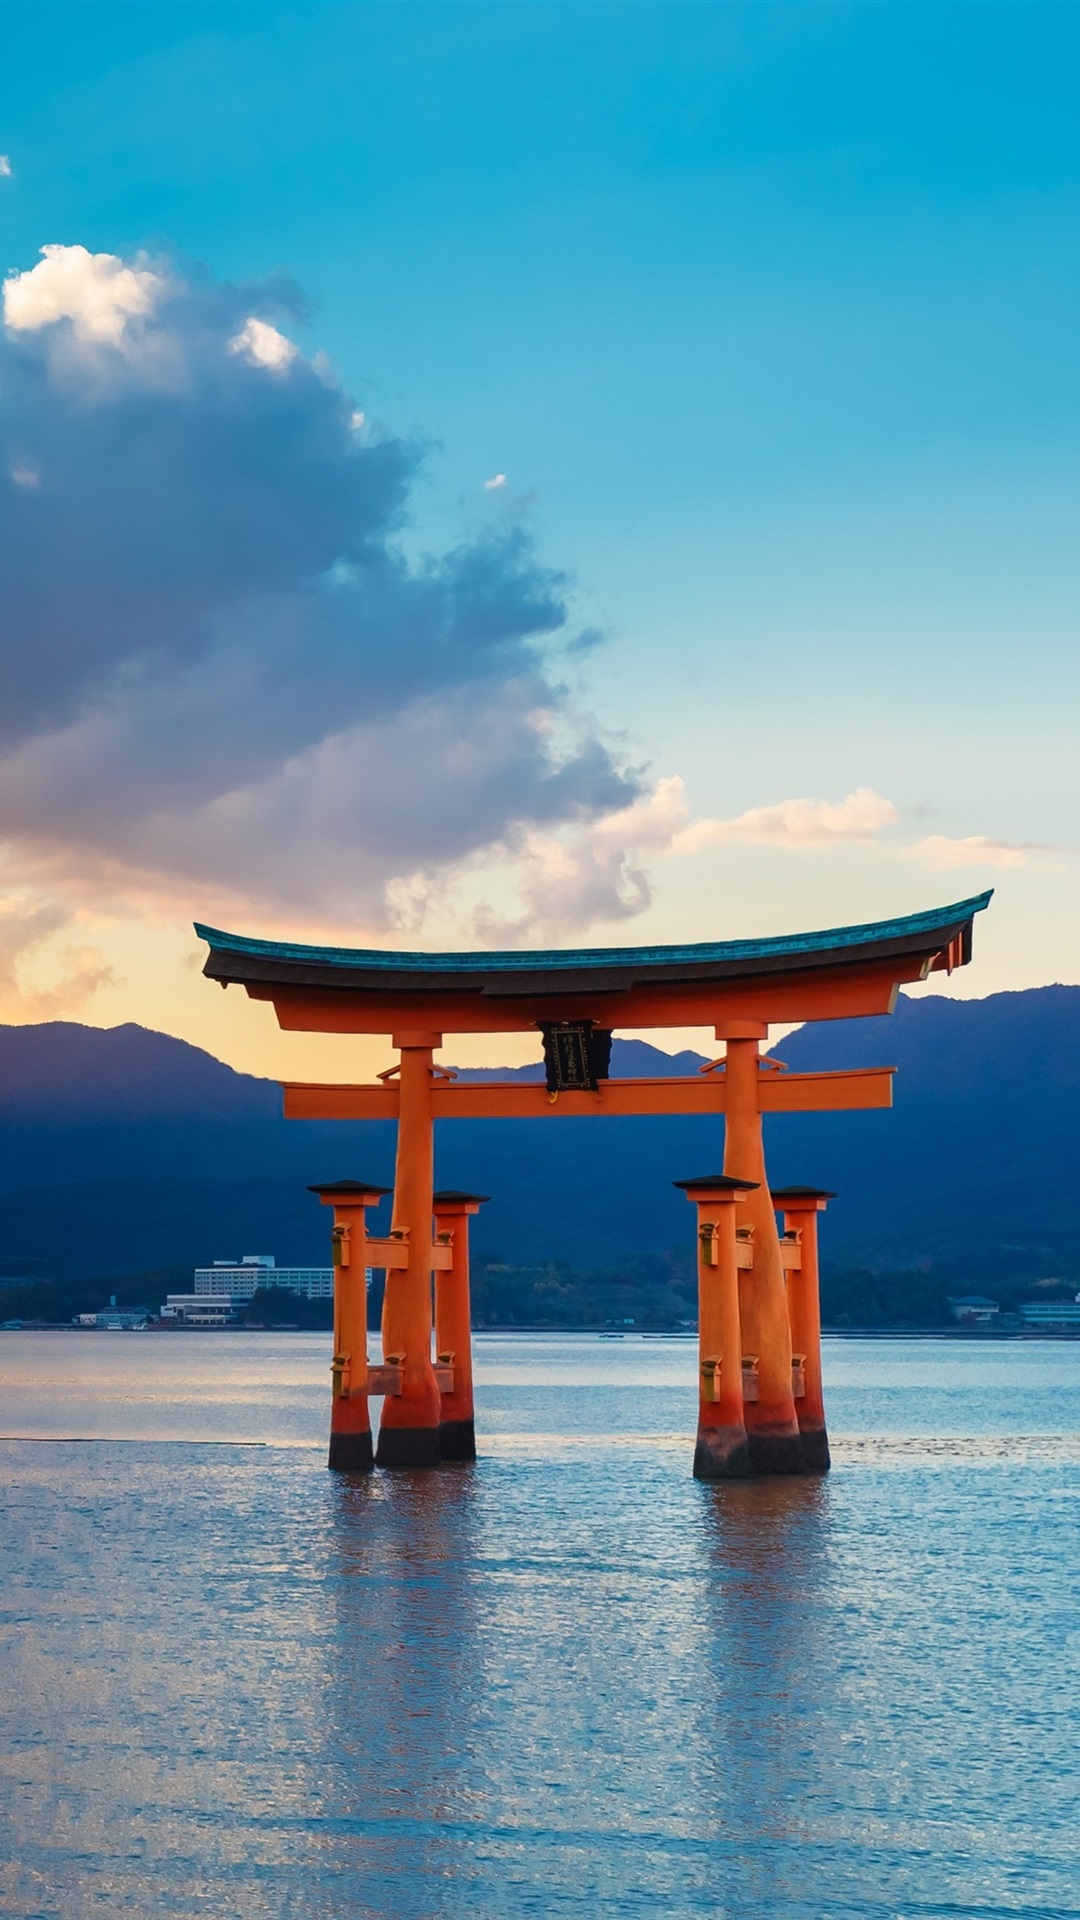 Iphone Wallpaper Torii Gate Sea Sunset Japan Itsukushima Shrine 1080x19 Wallpaper Teahub Io